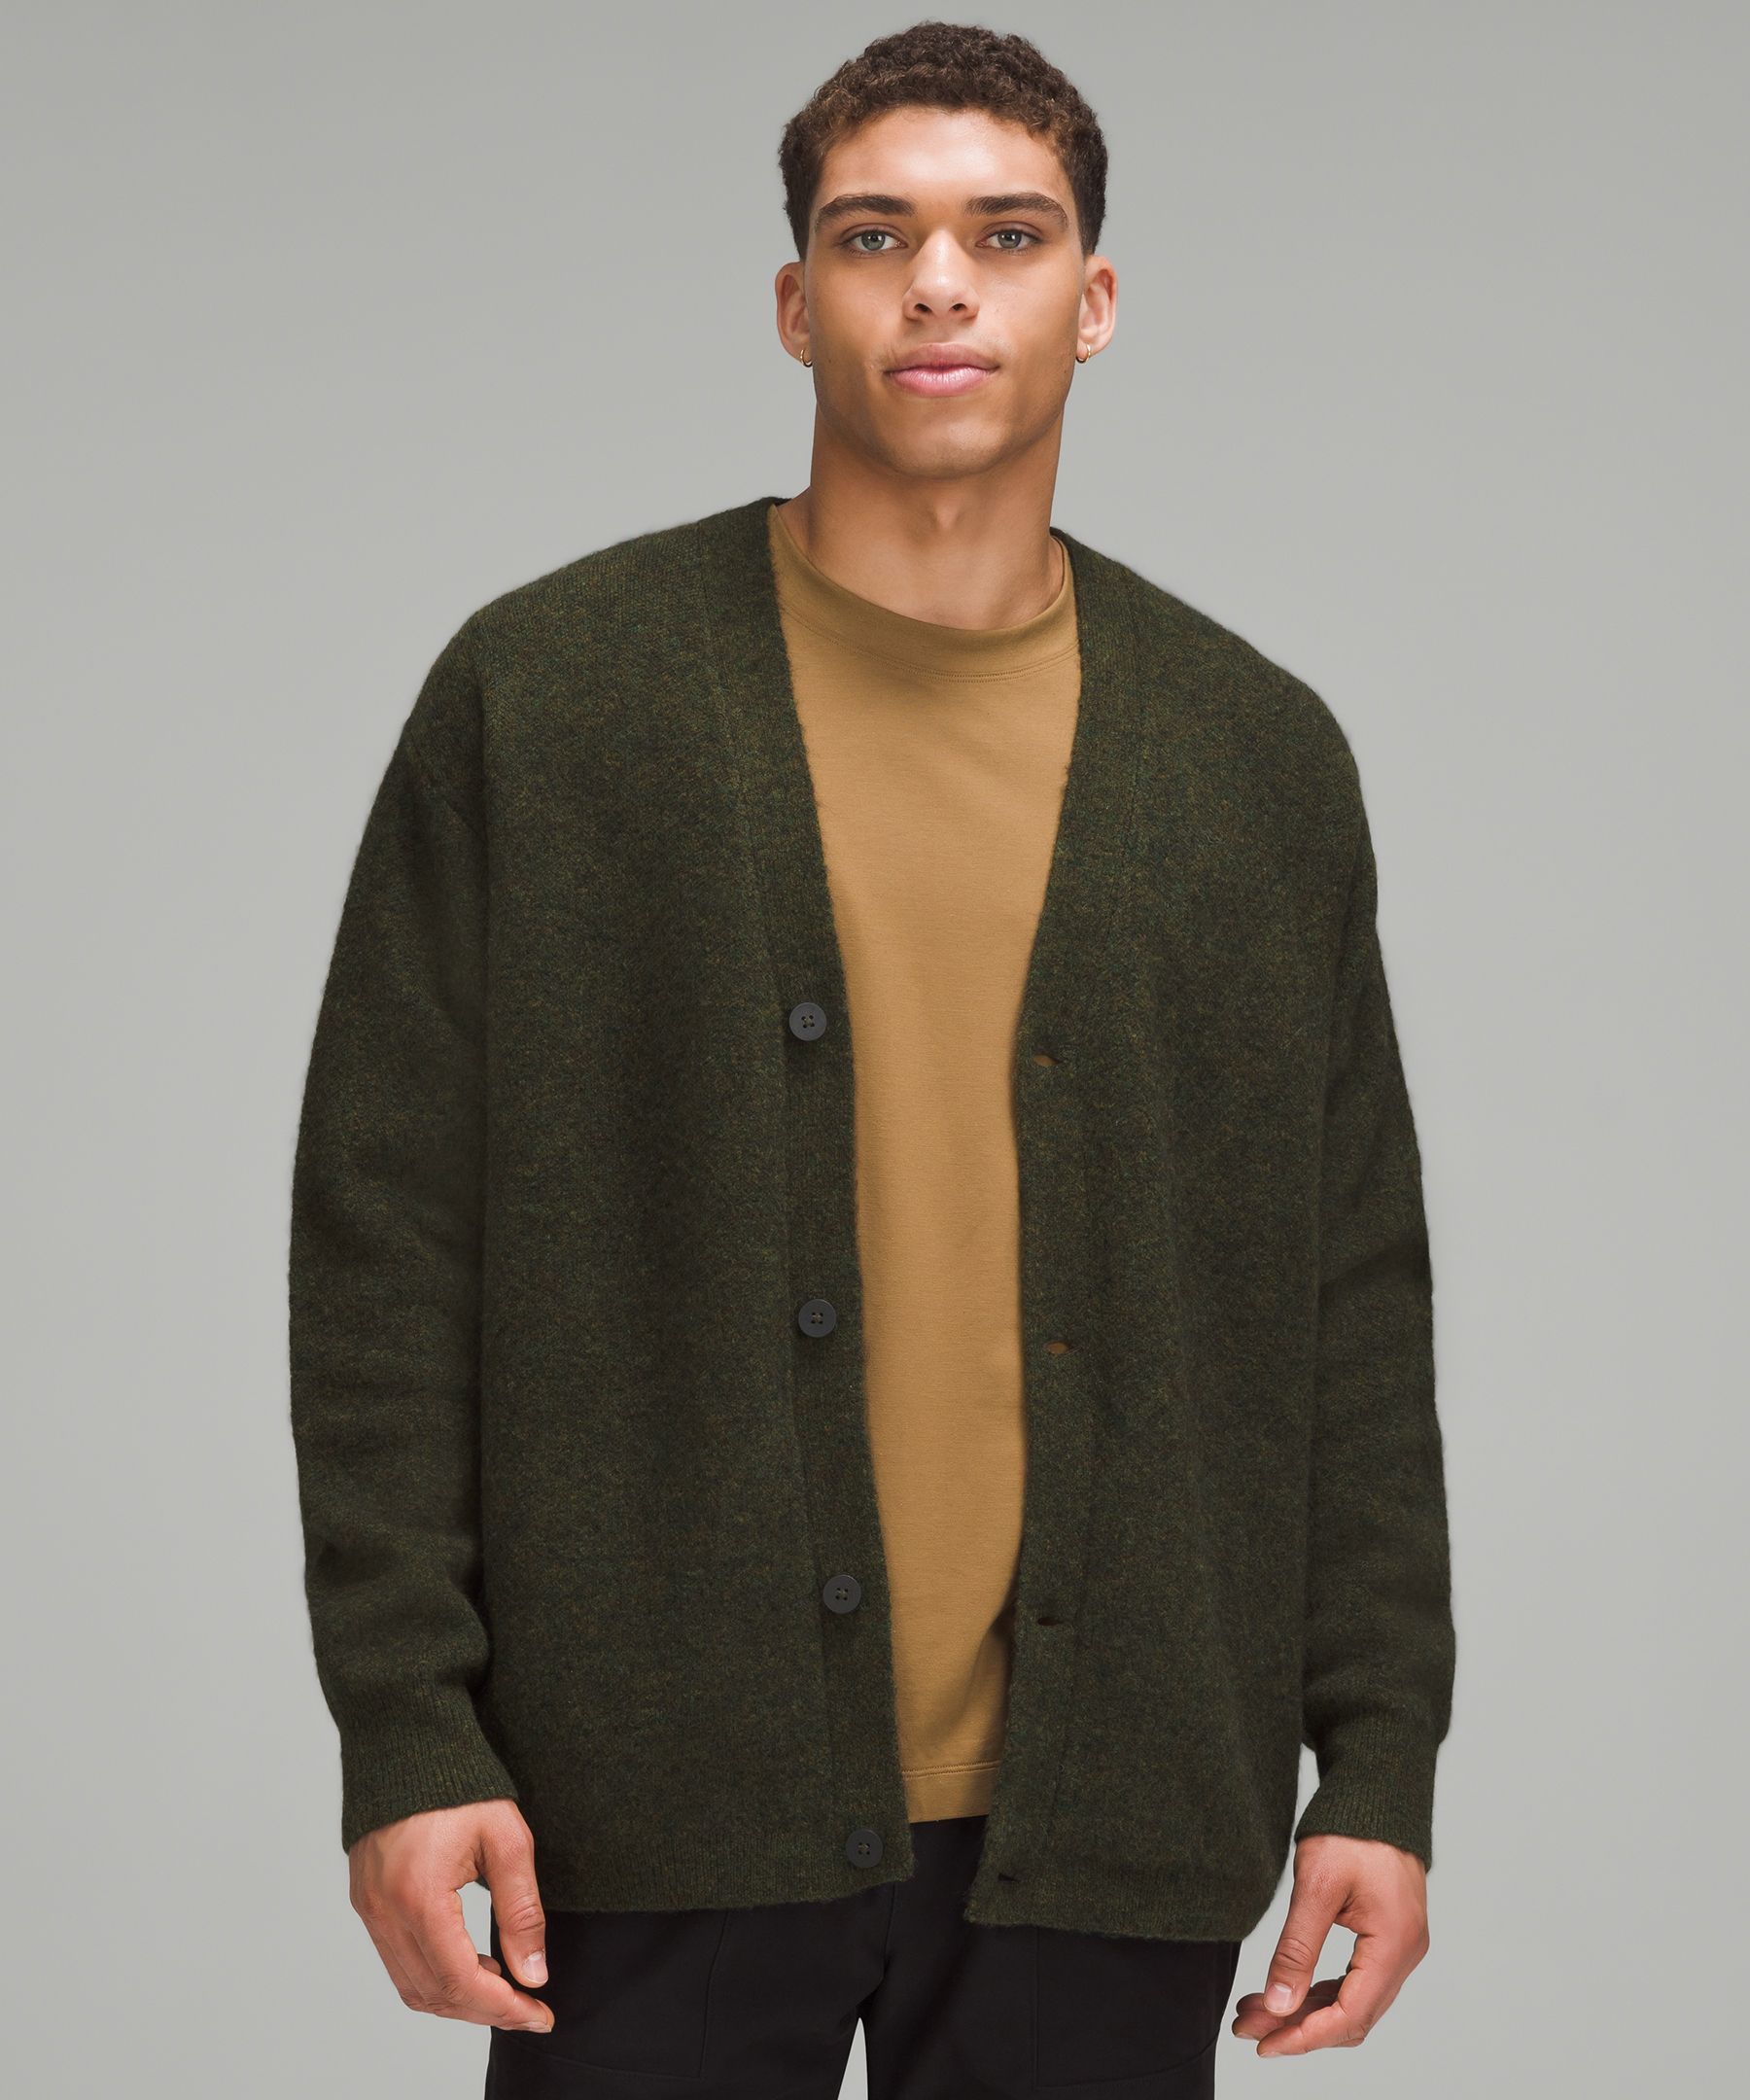 Lululemon Alpaca Wool-Blend Cardigan Sweater